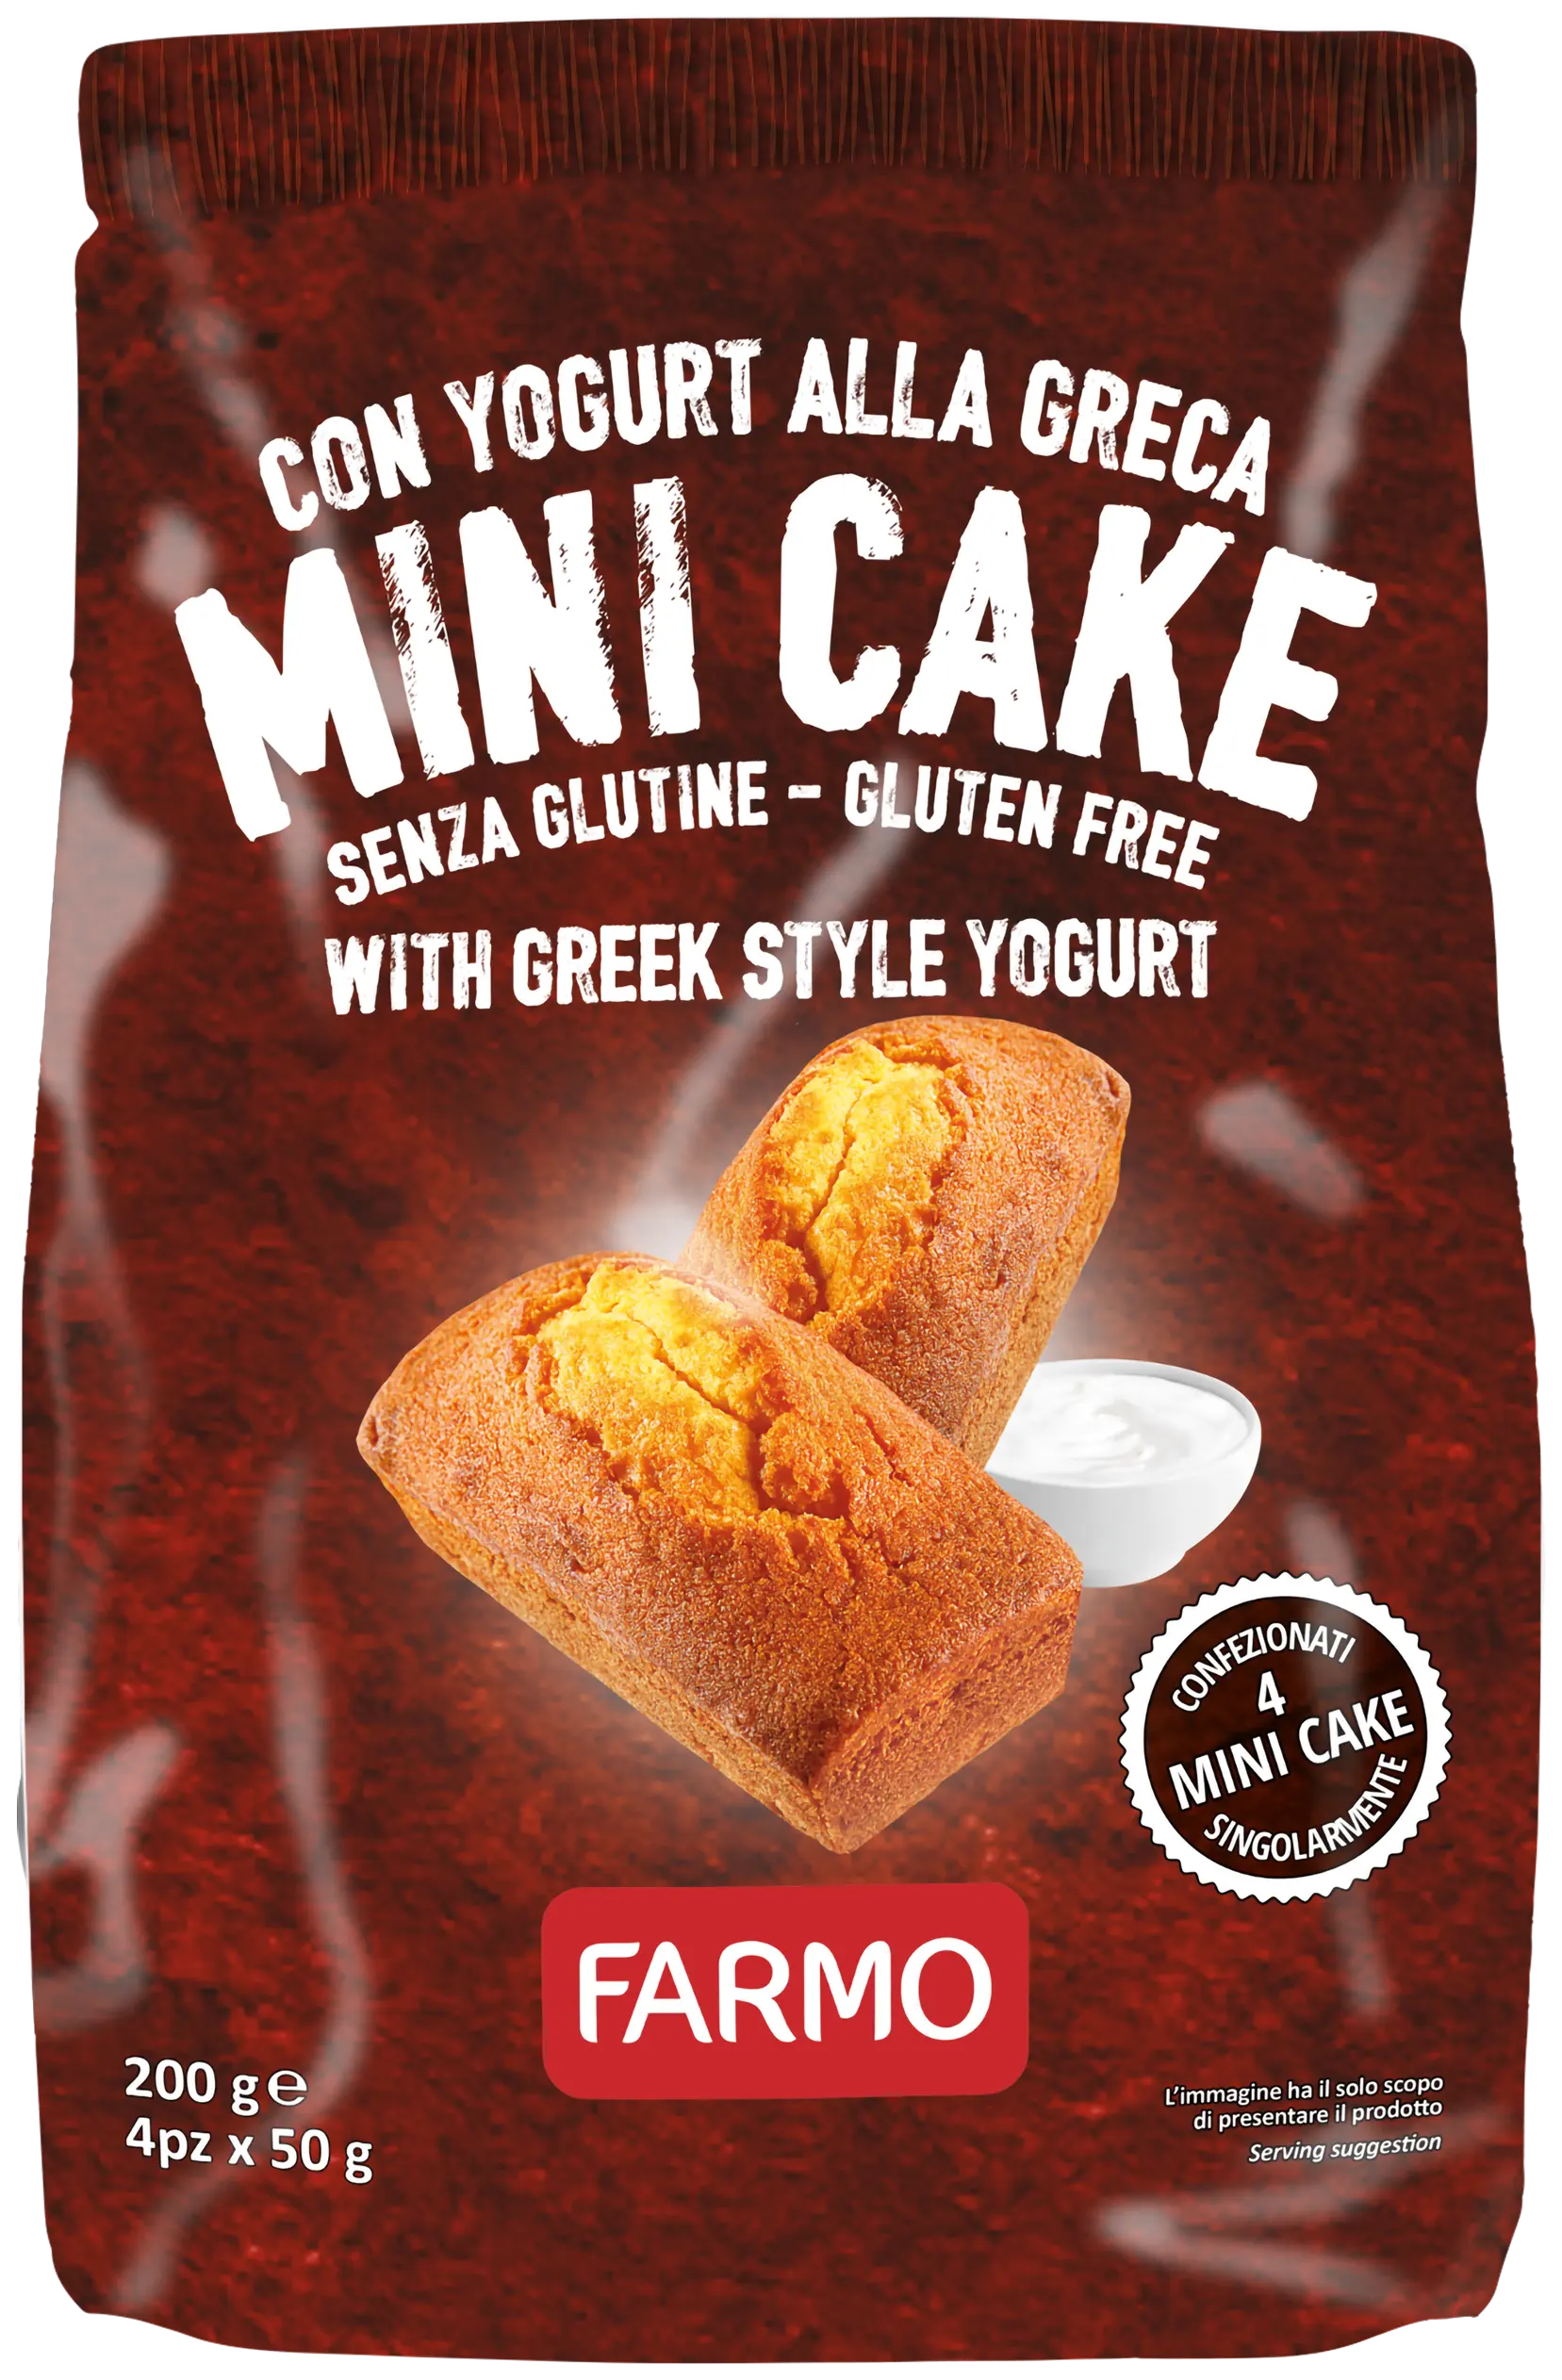 Best Italian Quality Mini Cake with Greek Style Yogurt 200 g gluten free Cakes for supermarket